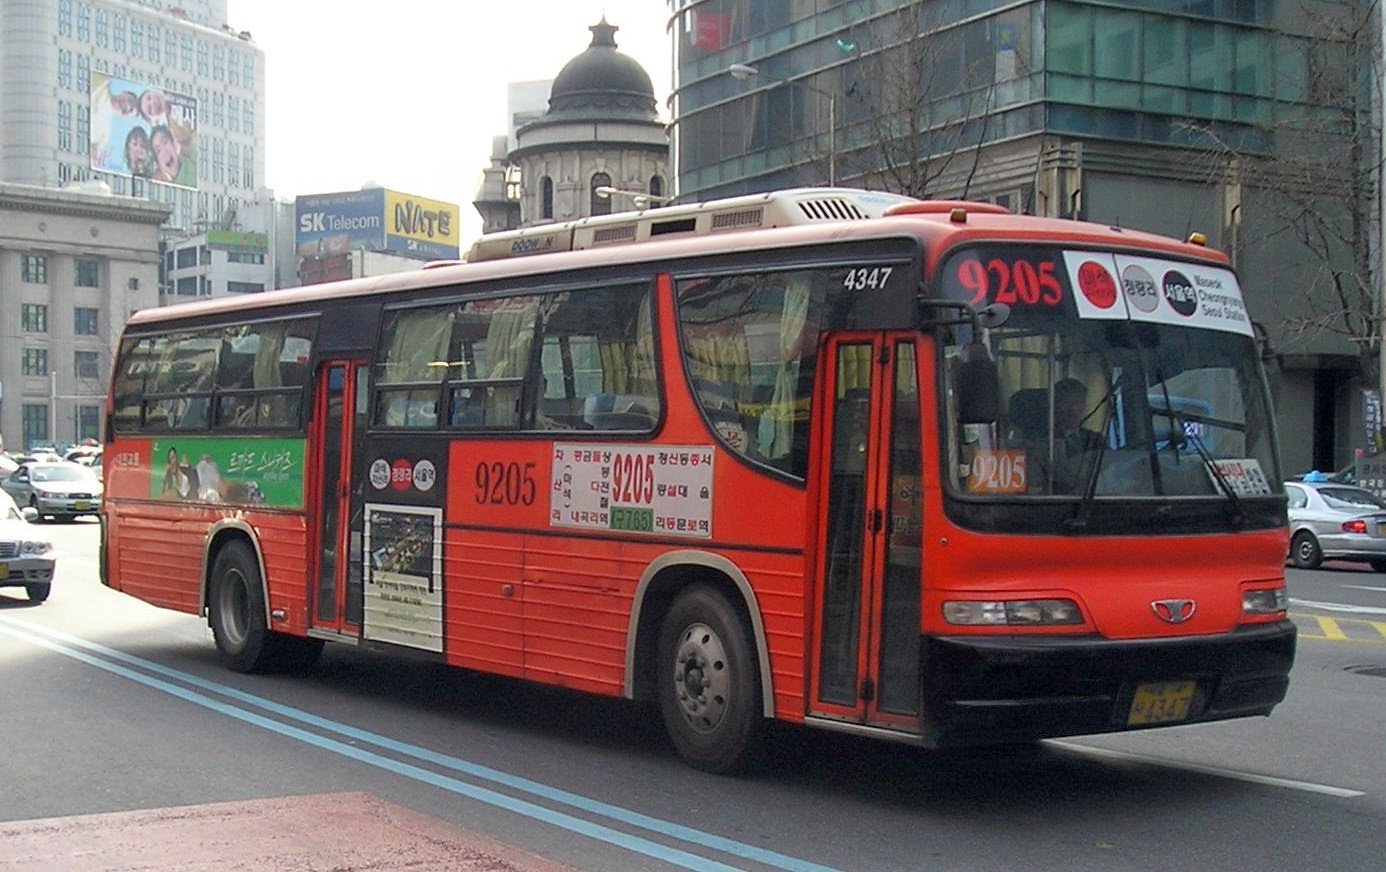 Korean bus